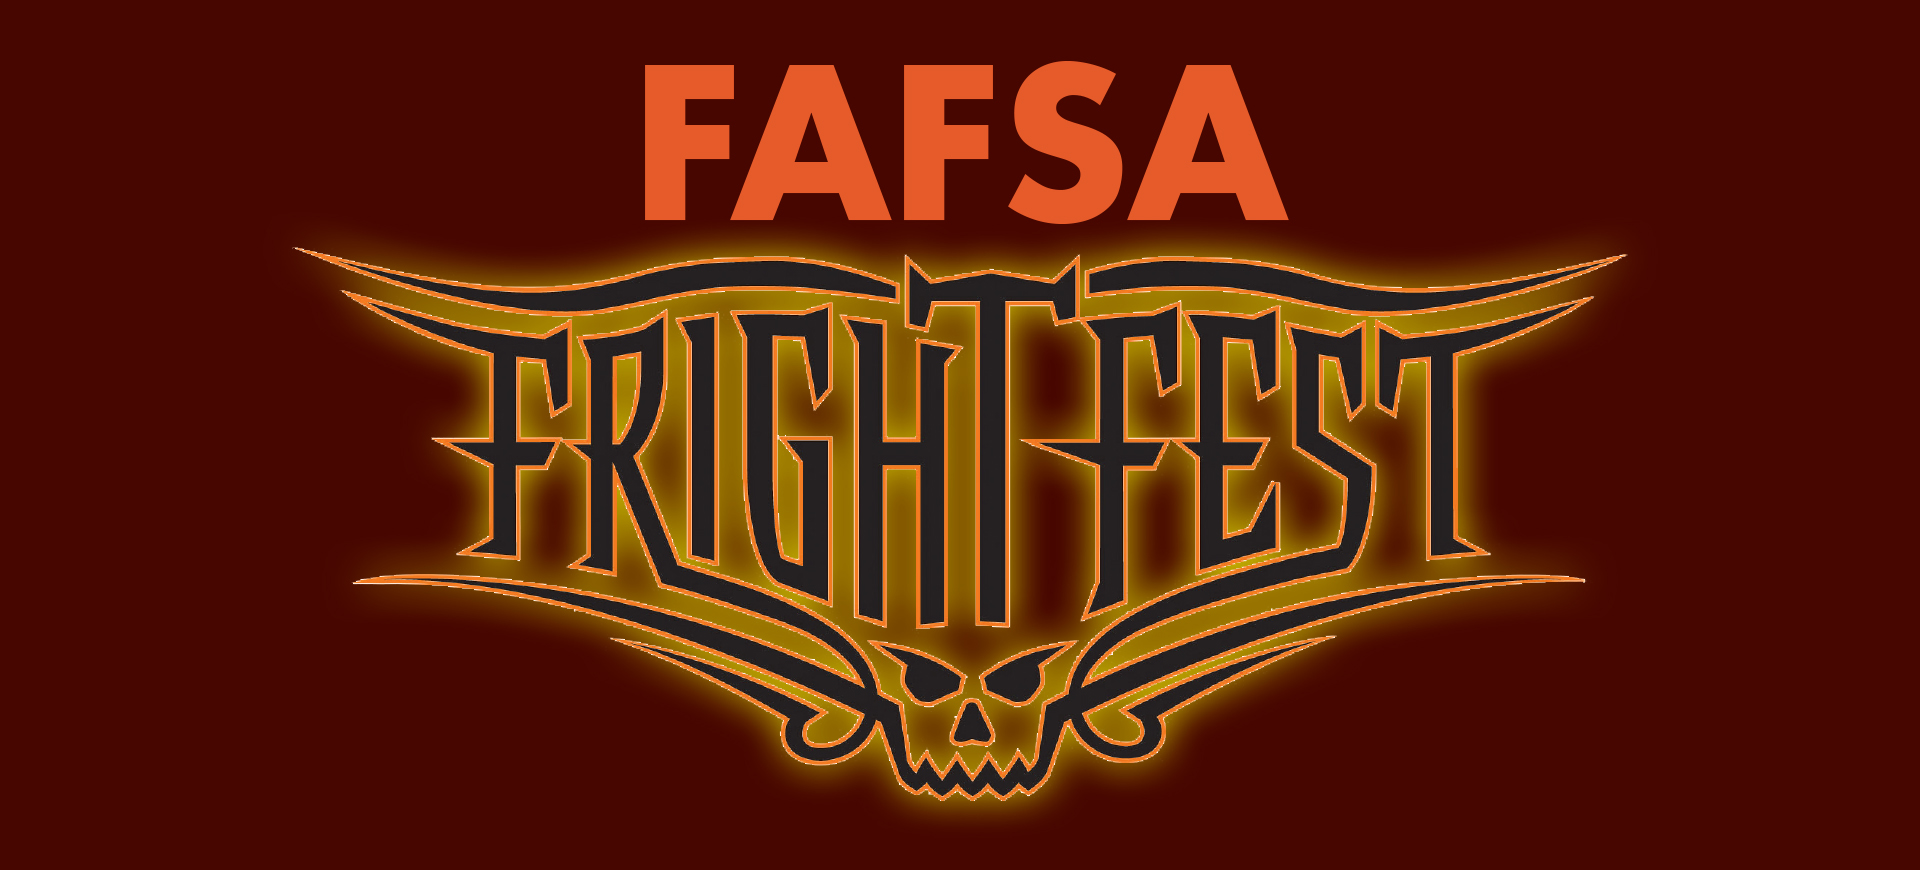 FAFSA Fright Fest